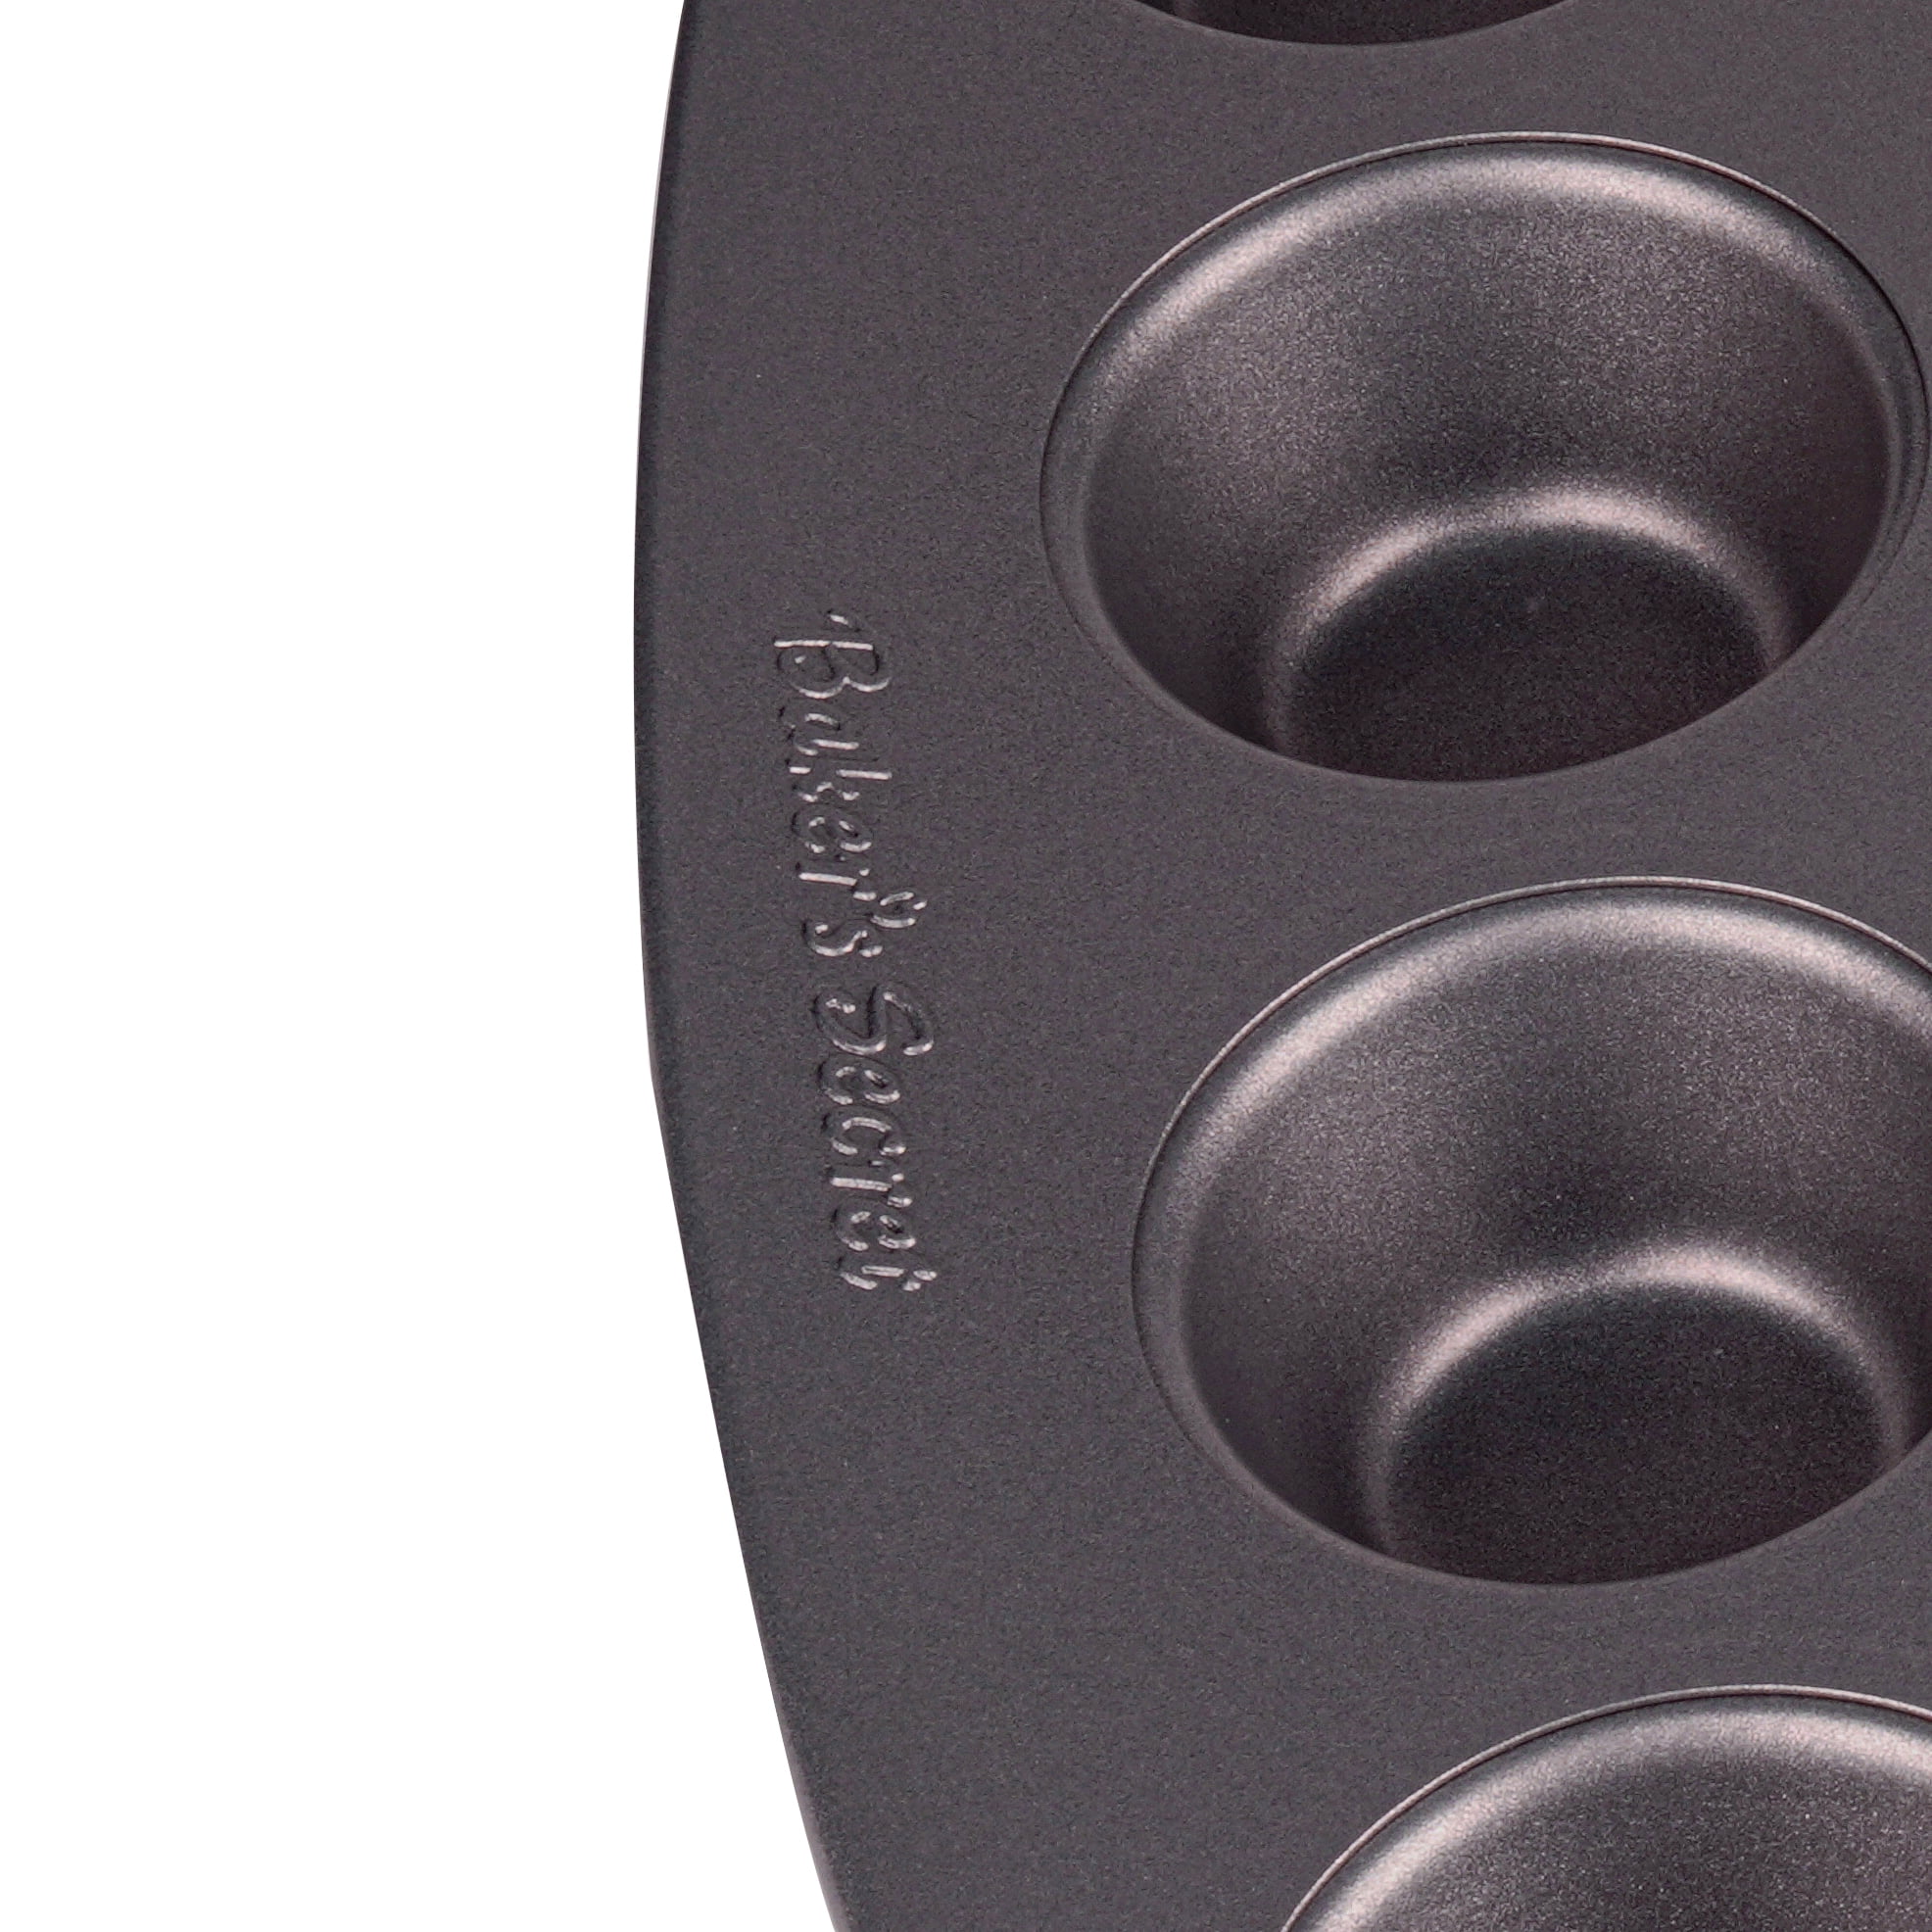 Baker's Secret Non-stick 24cups Muffin Pan, Optimum Non-Stick Performance,  Carbon Steel - Classic Collection